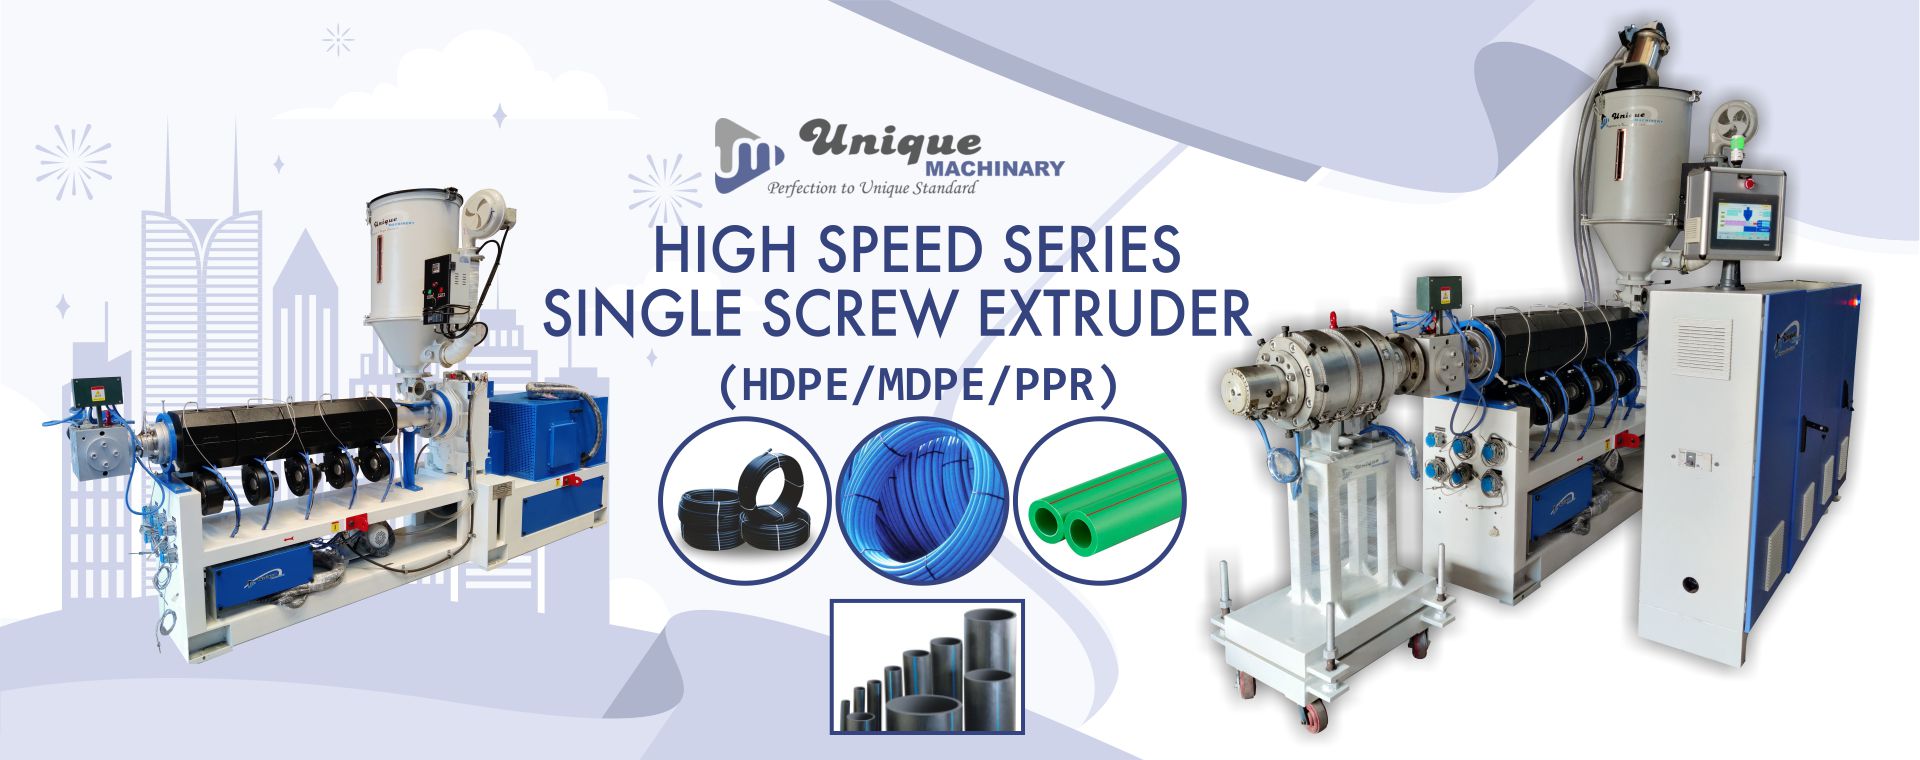 High Speed Series Single Screw Extruder